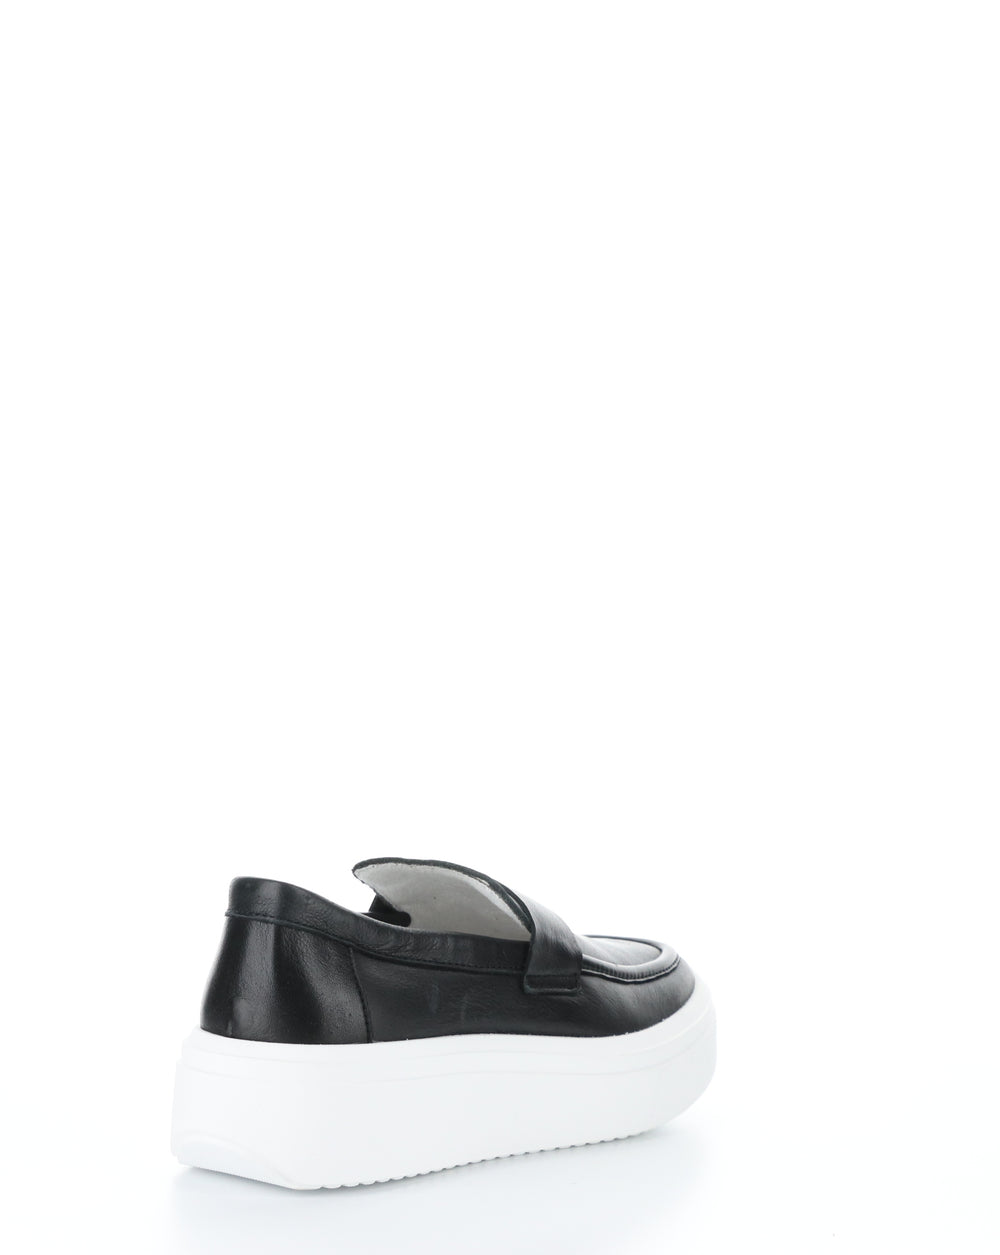 FRISCO BLACK Round toe Shoes